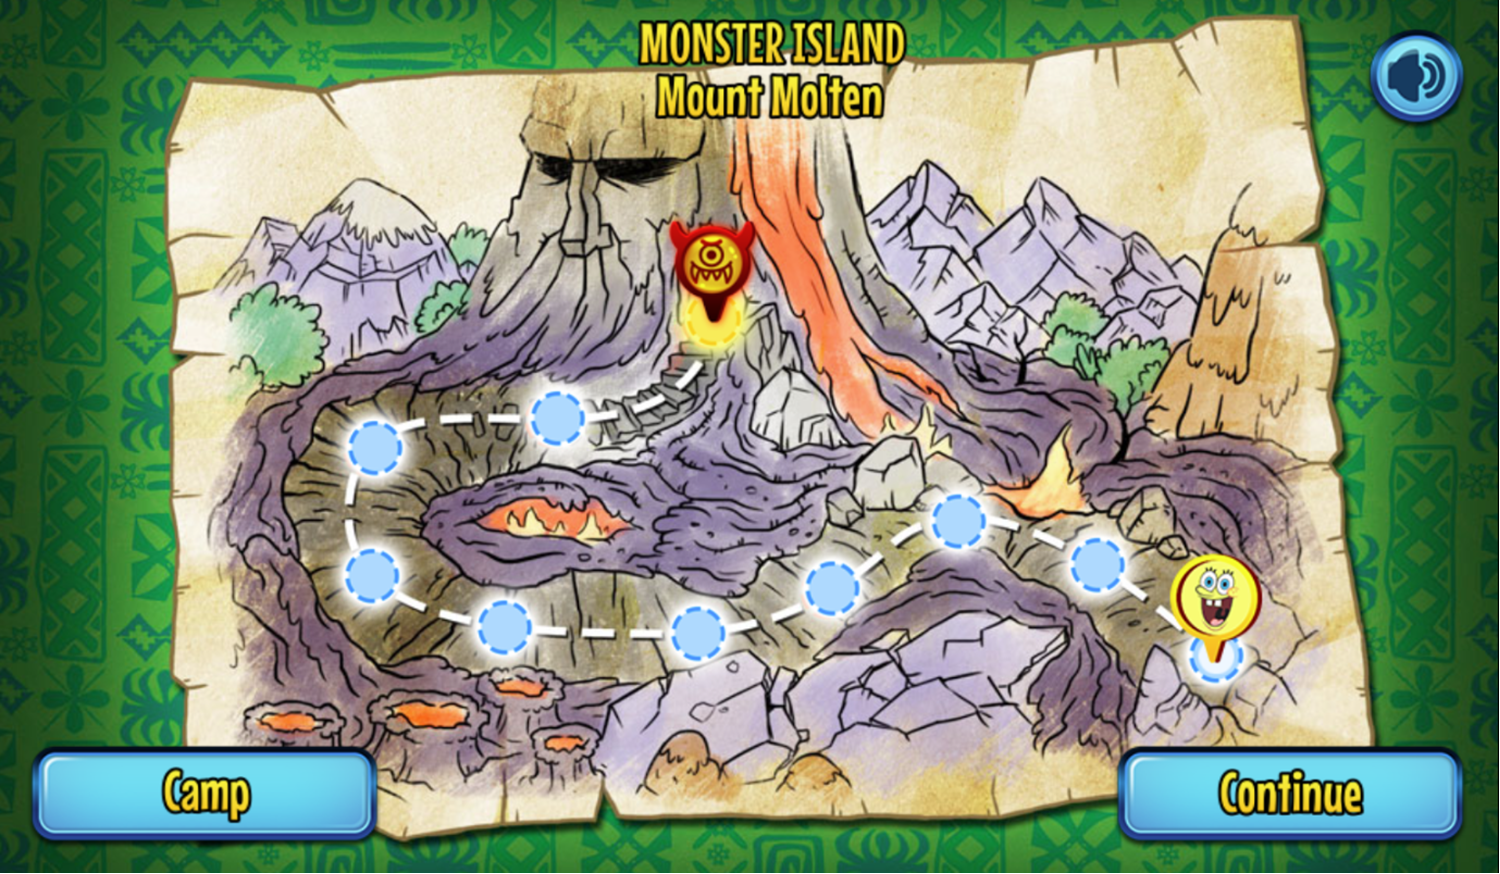 SpongeBob SquarePants Monster Island Adventure Game Mount Molten Map Screen Screenshot.